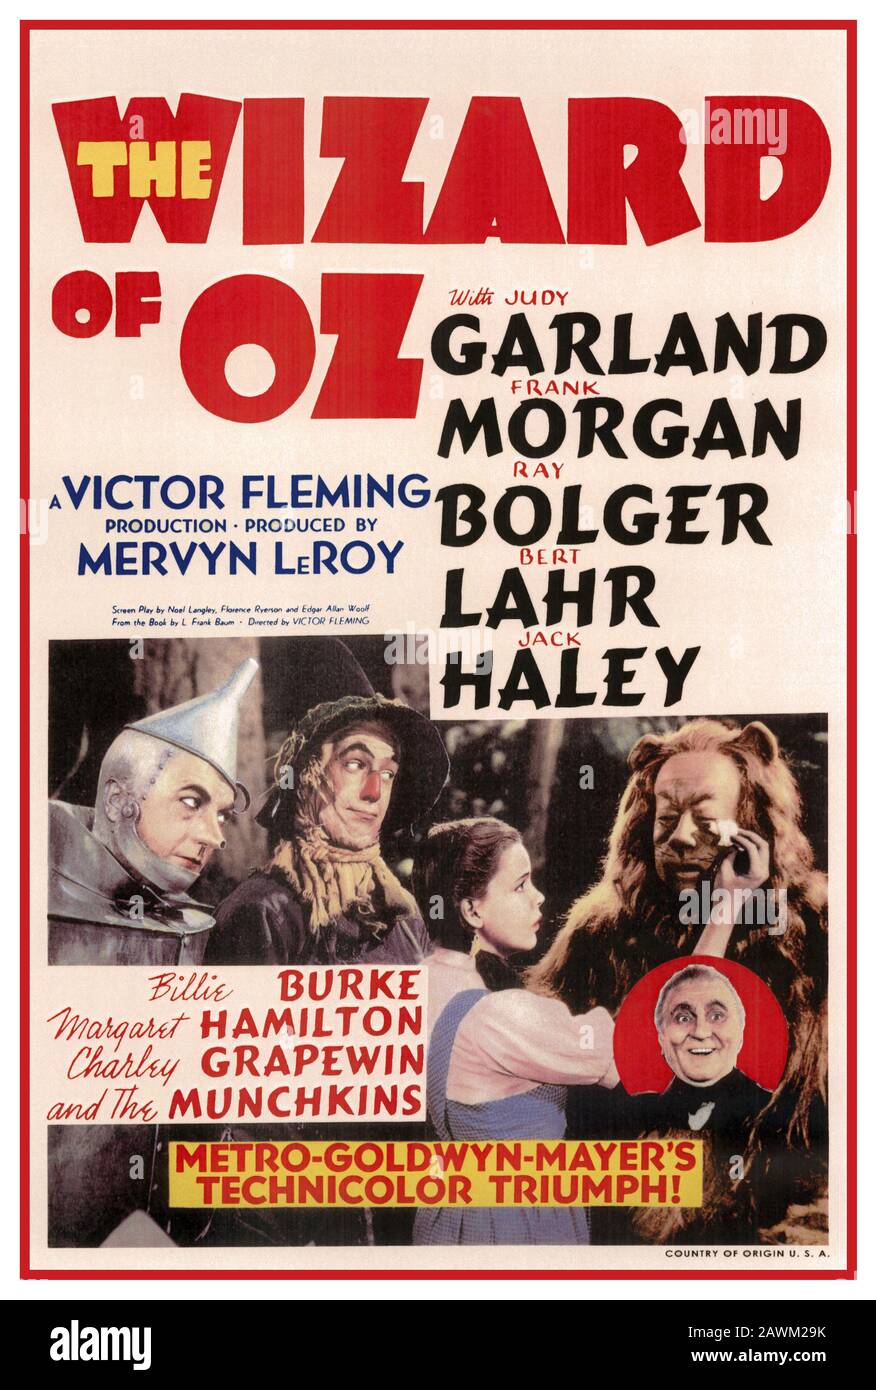 'Wizard of OZ'  Movie Film Cinema poster 1930's 'Wizard of OZ' original movie poster 1939 starring Judy Garland Frank Morgan, Ray Bolger, Bert Lahr, Jack Haley Victor Fleming and Mervyn LeRoy production MGM Stock Photo